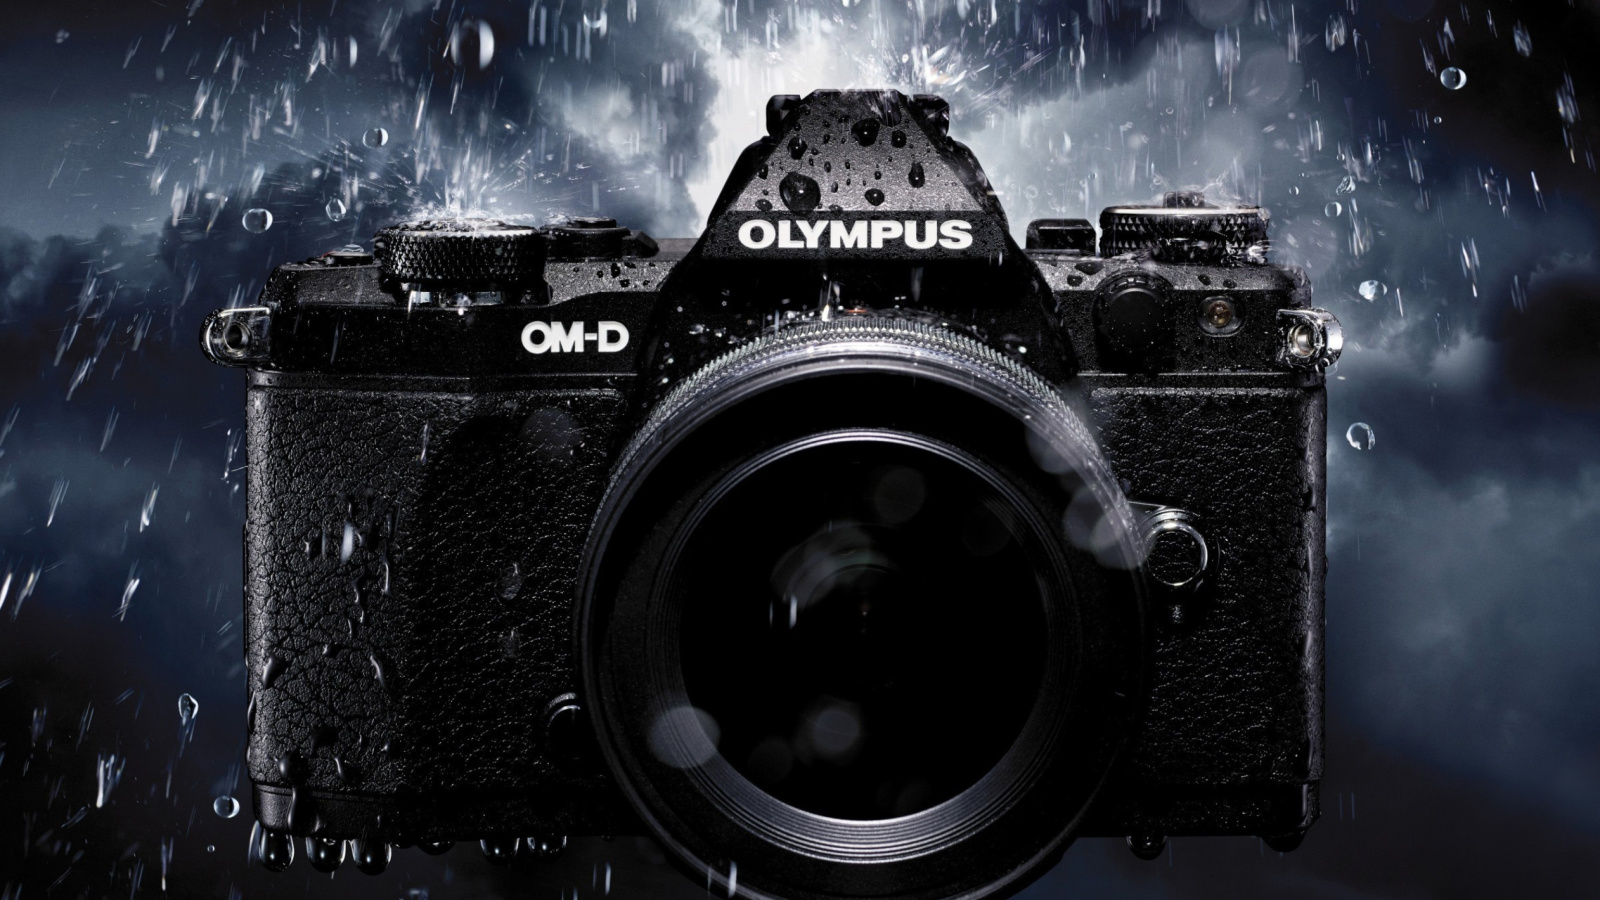 Обои Olympus Om D 1600x900